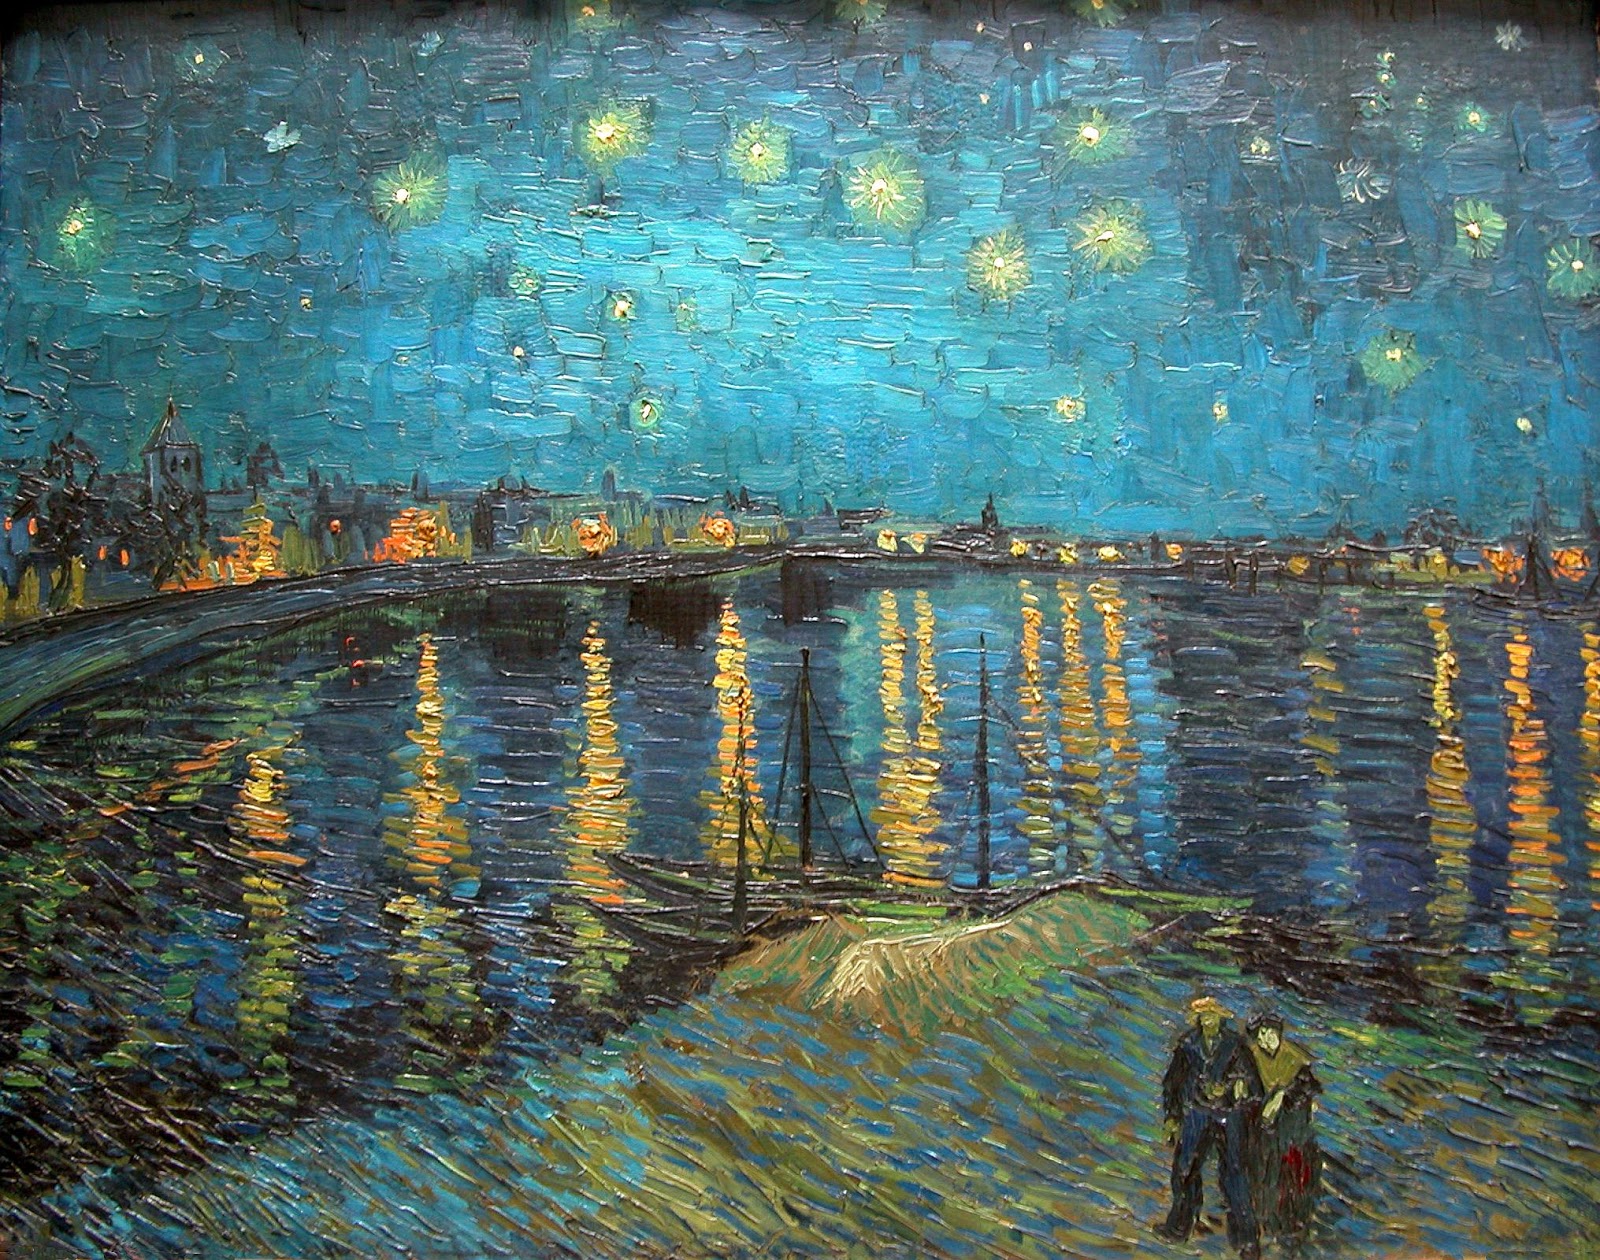 Vincent+Van+Gogh-1853-1890 (550).jpg